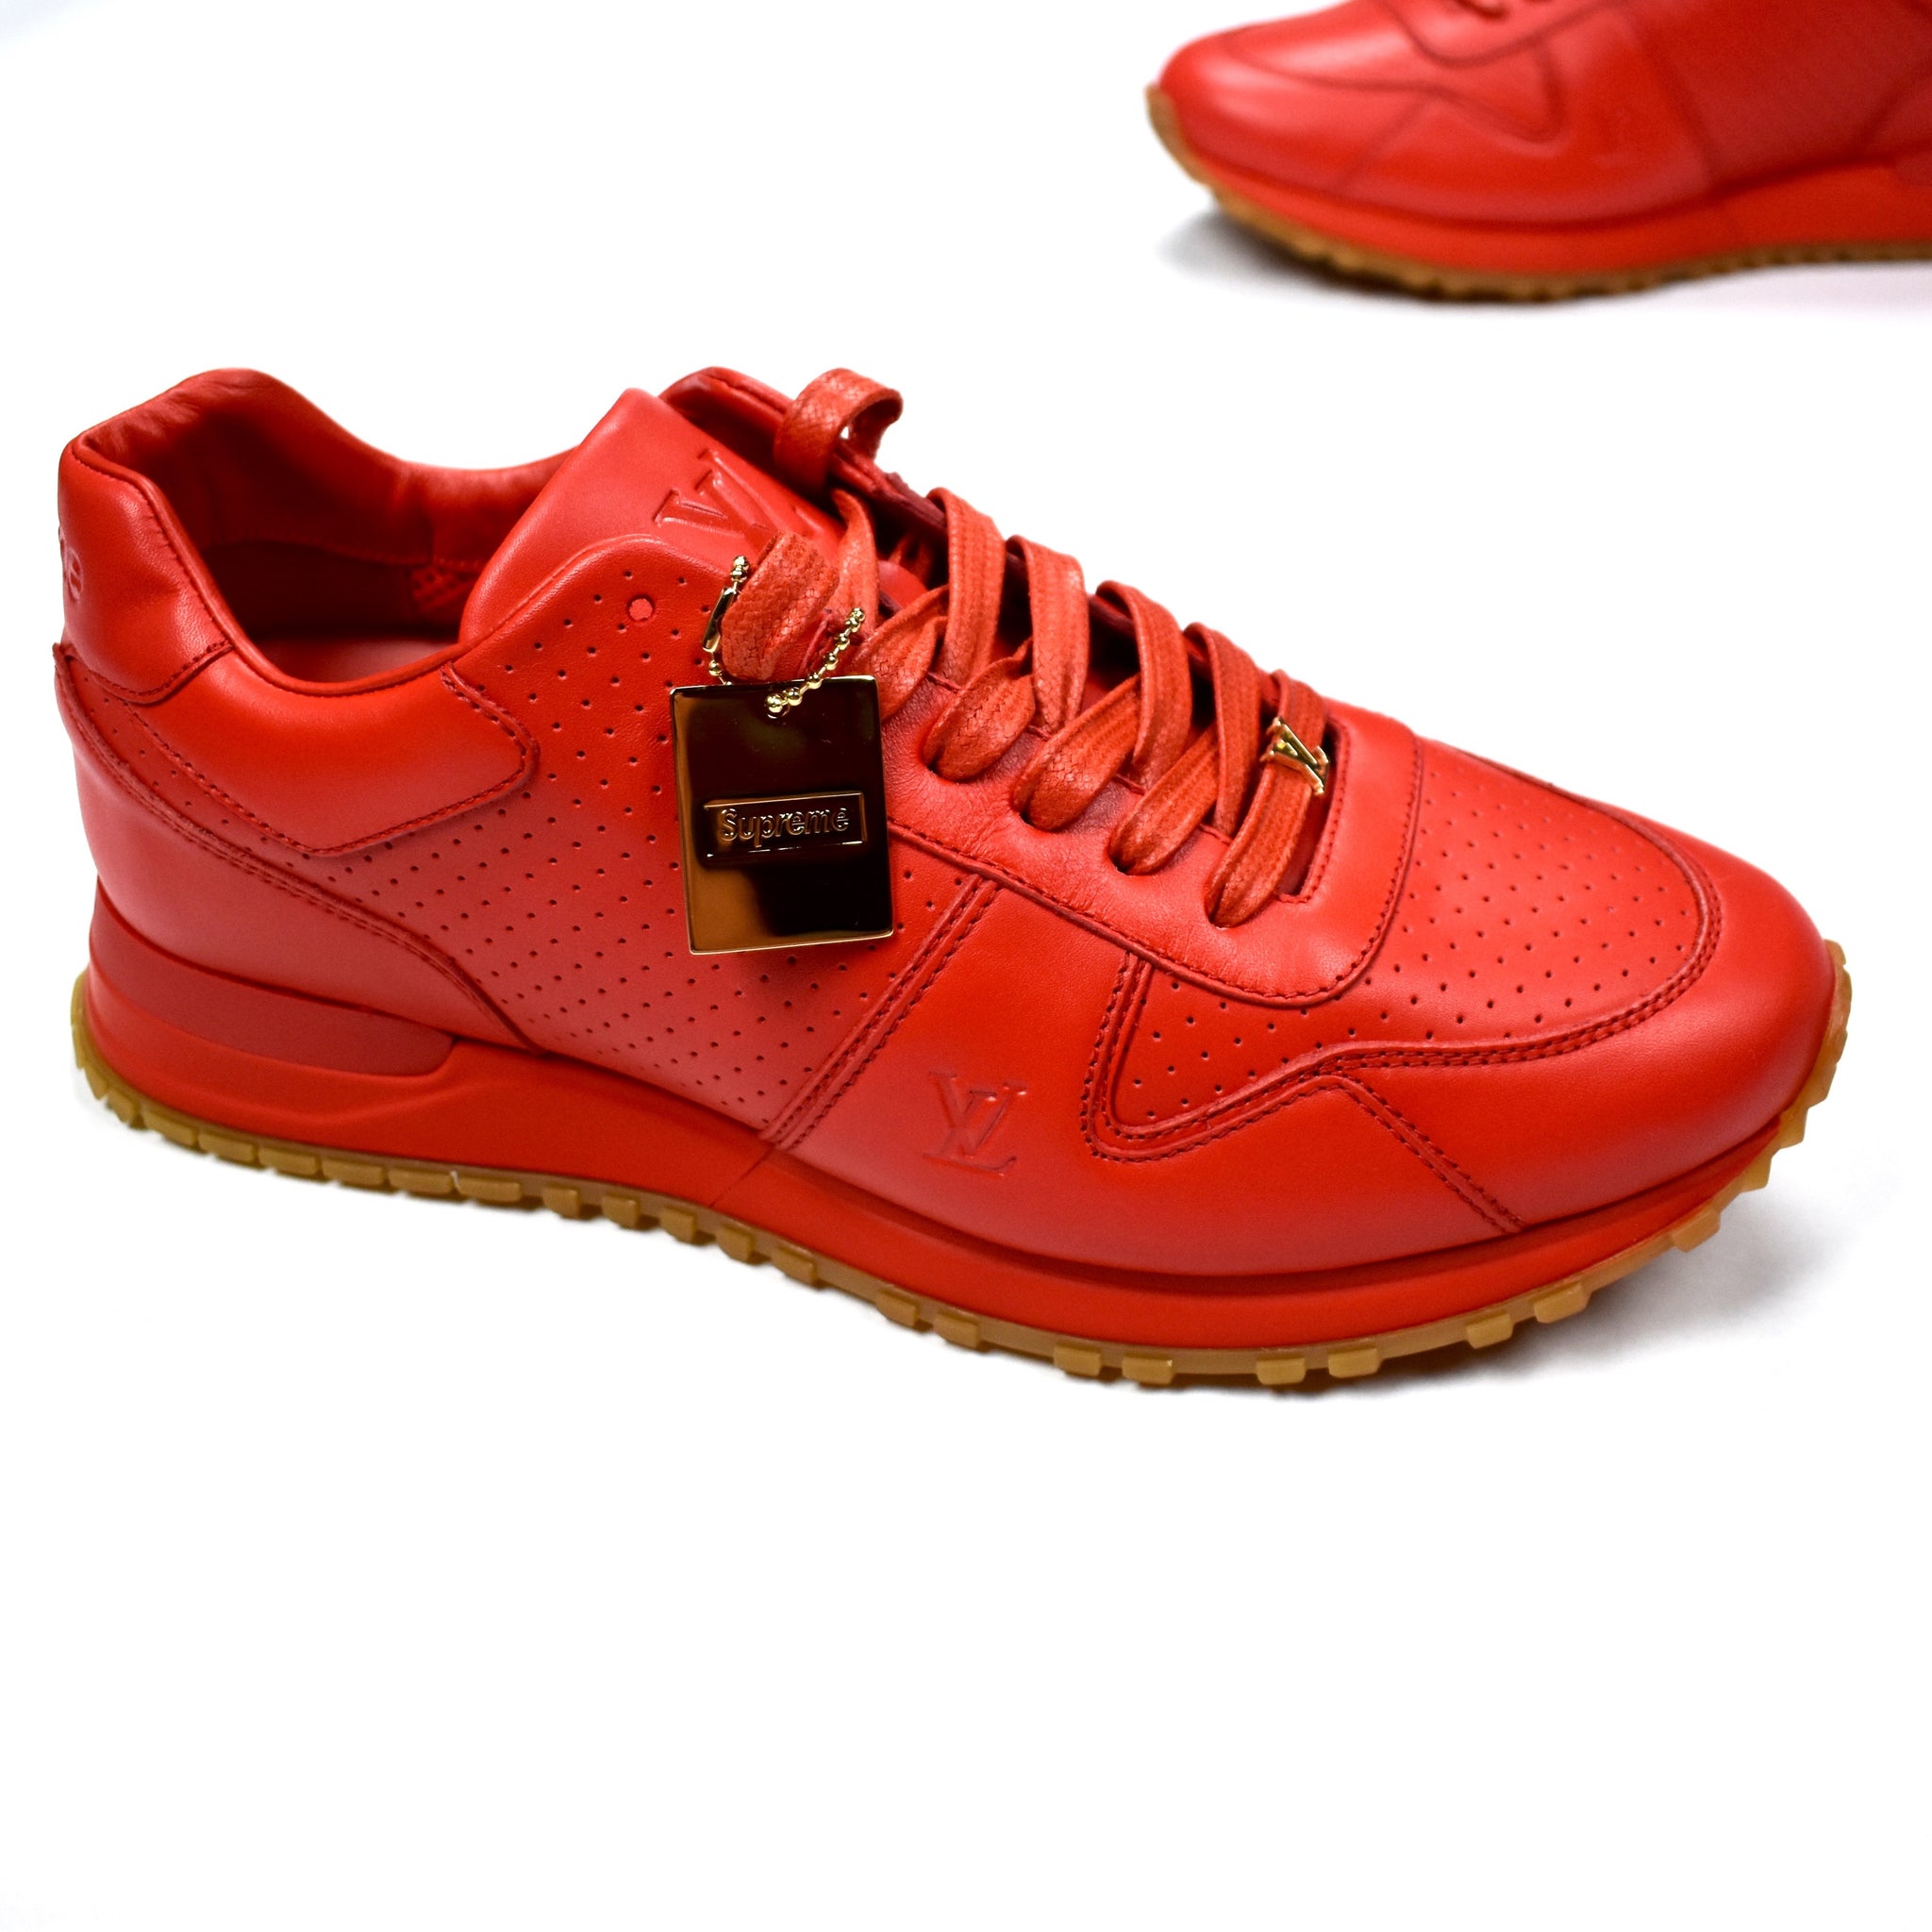 Louis Vuitton x Supreme Run Away (Black Gum) Sneakers 7.5